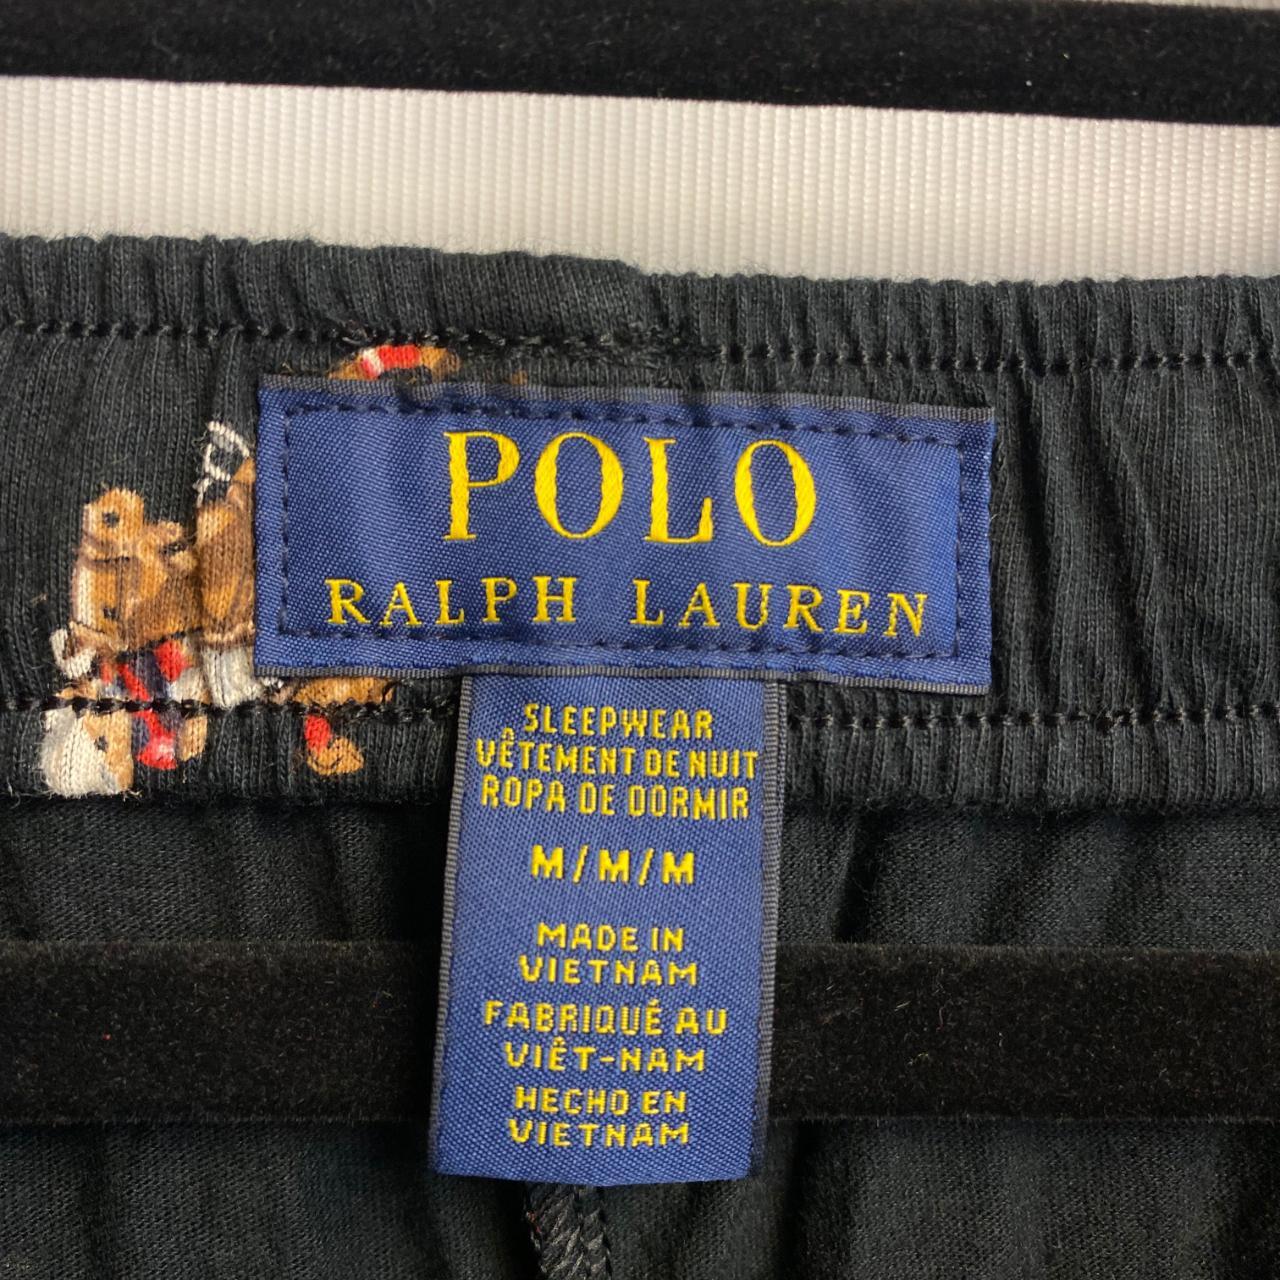 Polo Ralph Lauren Pony Mens Pajama Lounge Pyjama... - Depop